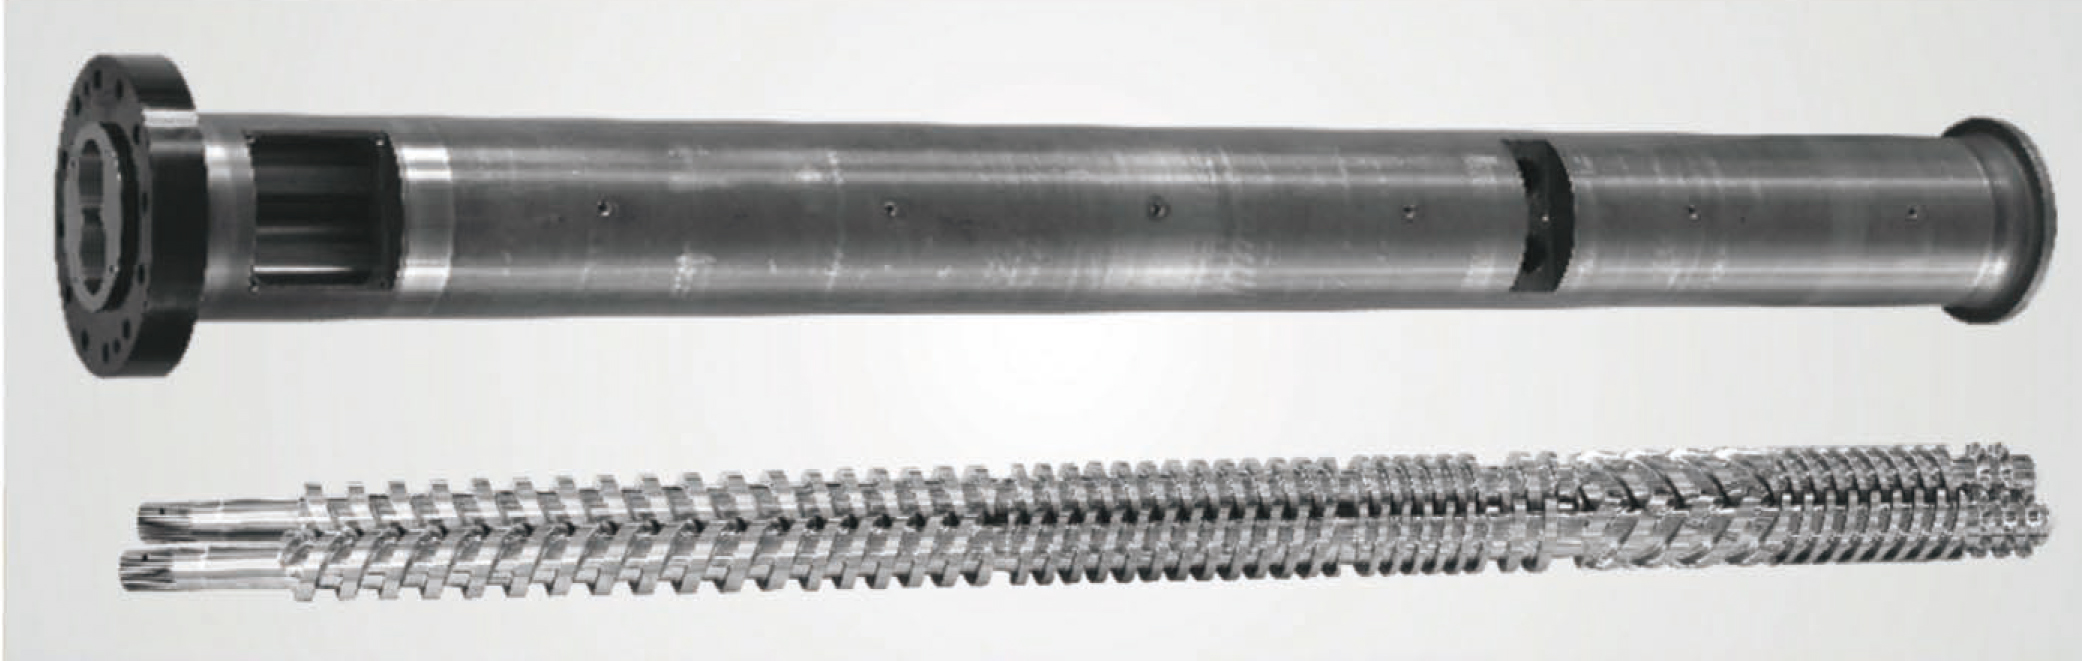 Corpo de parafuso duplo paralelo para tubo e perfil de PVC